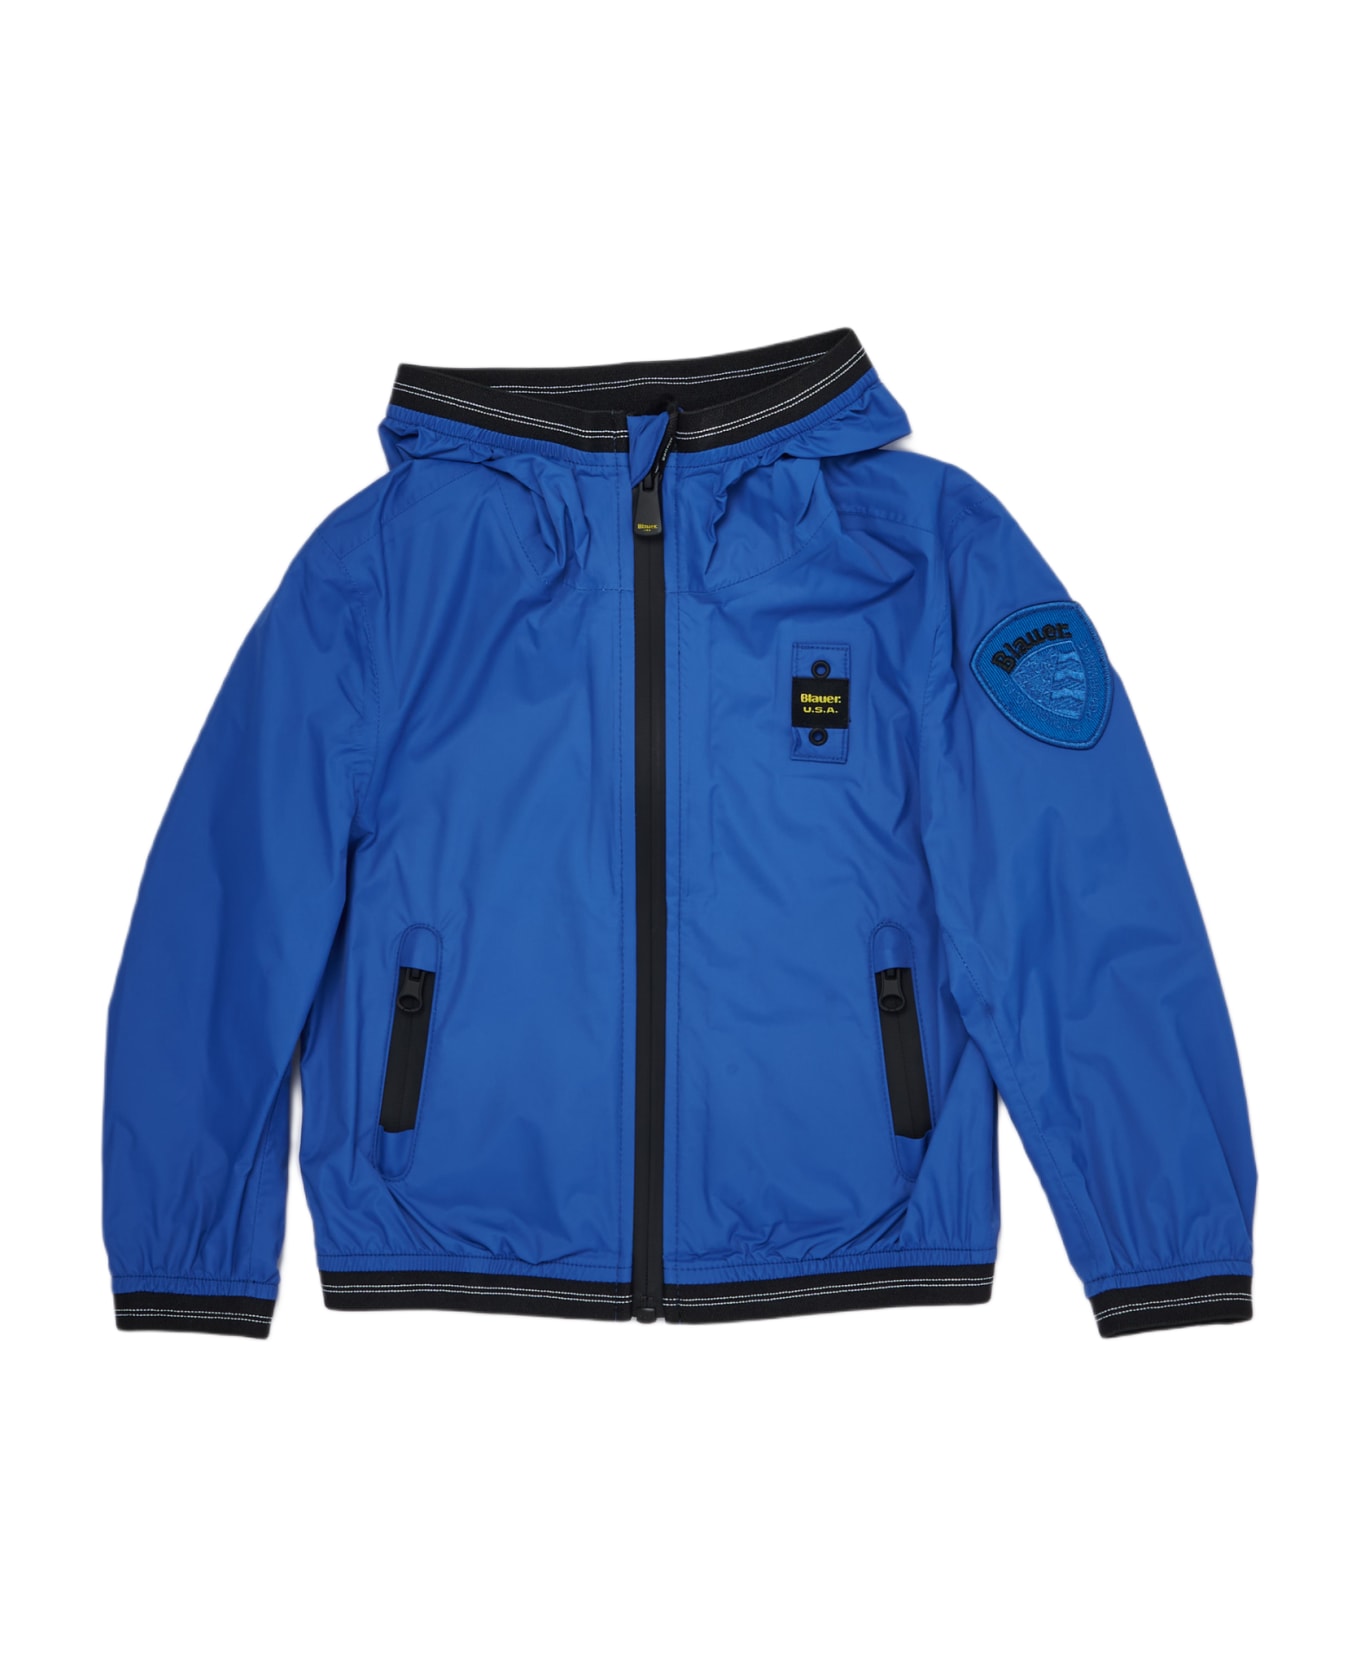 Blauer Jacket Jacket - ROYAL